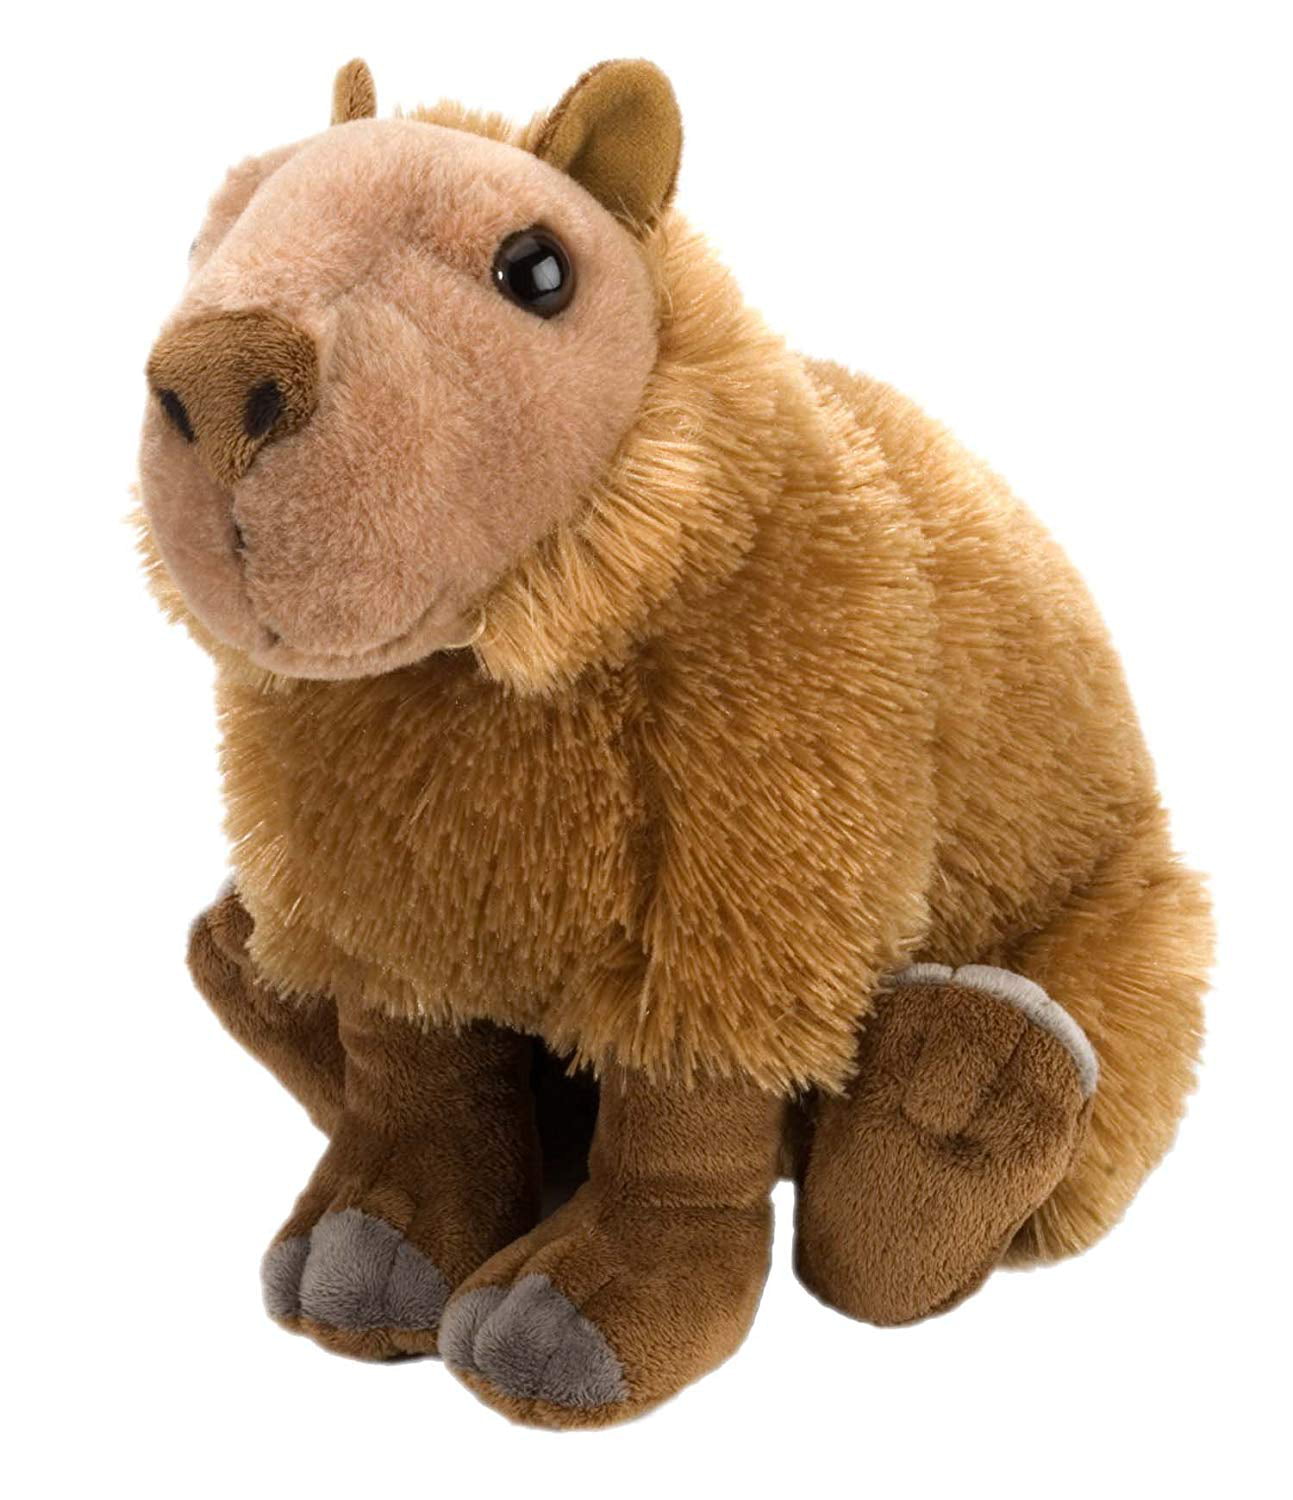 Плюшевая капибара. Capybara Plush Toy. Игрушки Ханса капибара. Игрушка капибара мягкая Hansa.